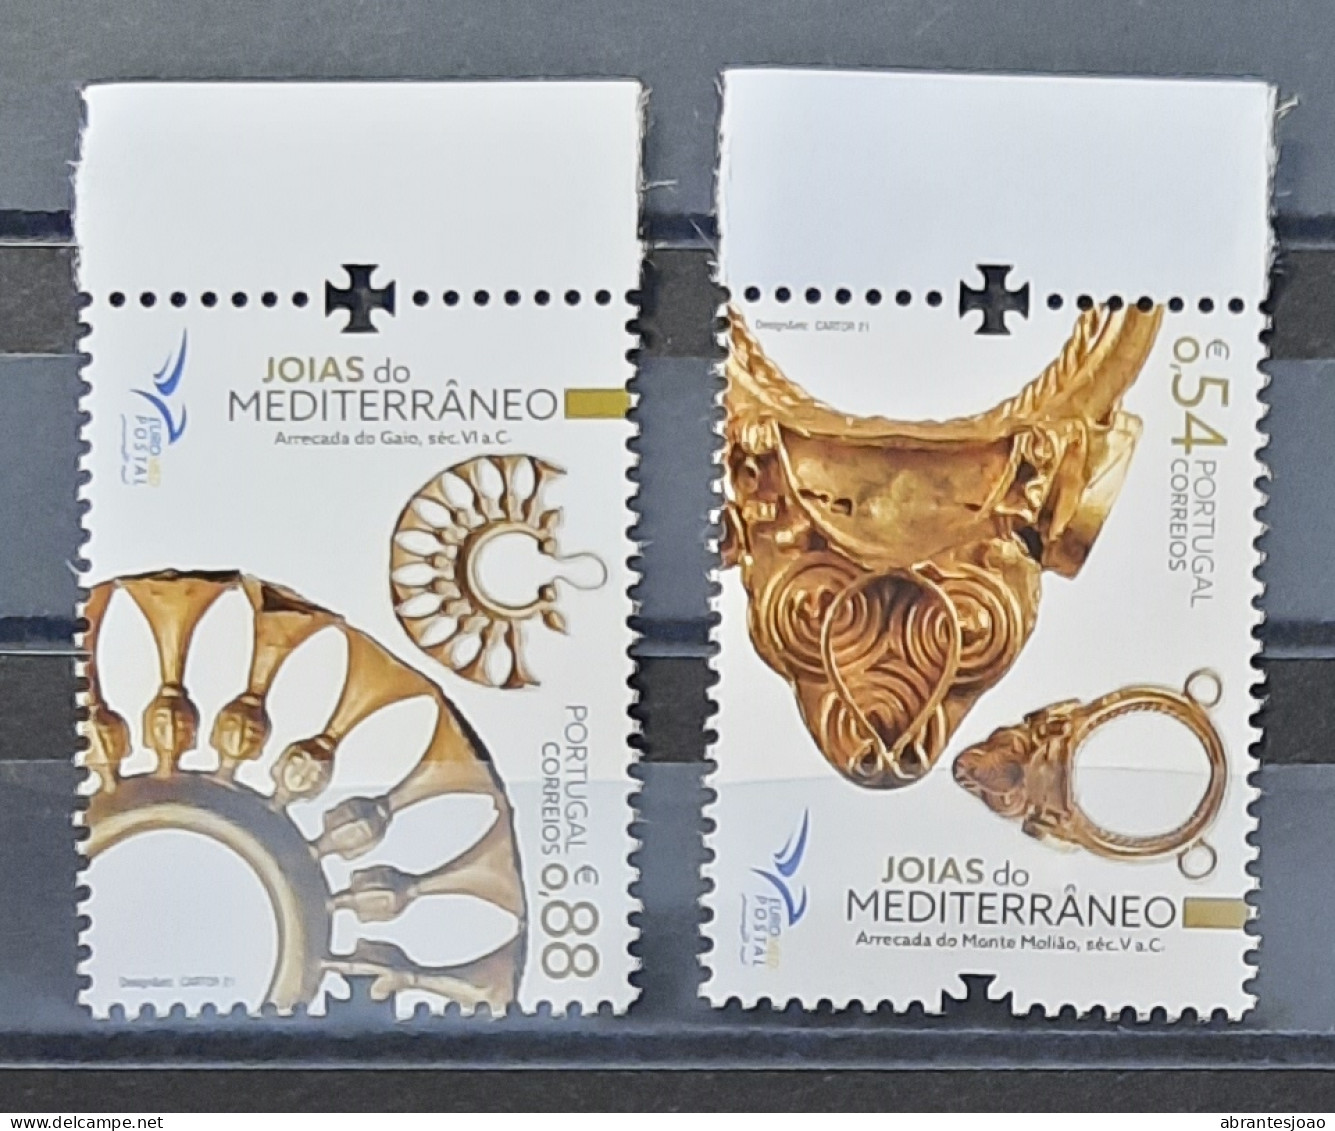 2021 - Portugal - MNH - EUROMED POSTAL - Jewels Of Mediterranean - 2 Stamps - Ungebraucht